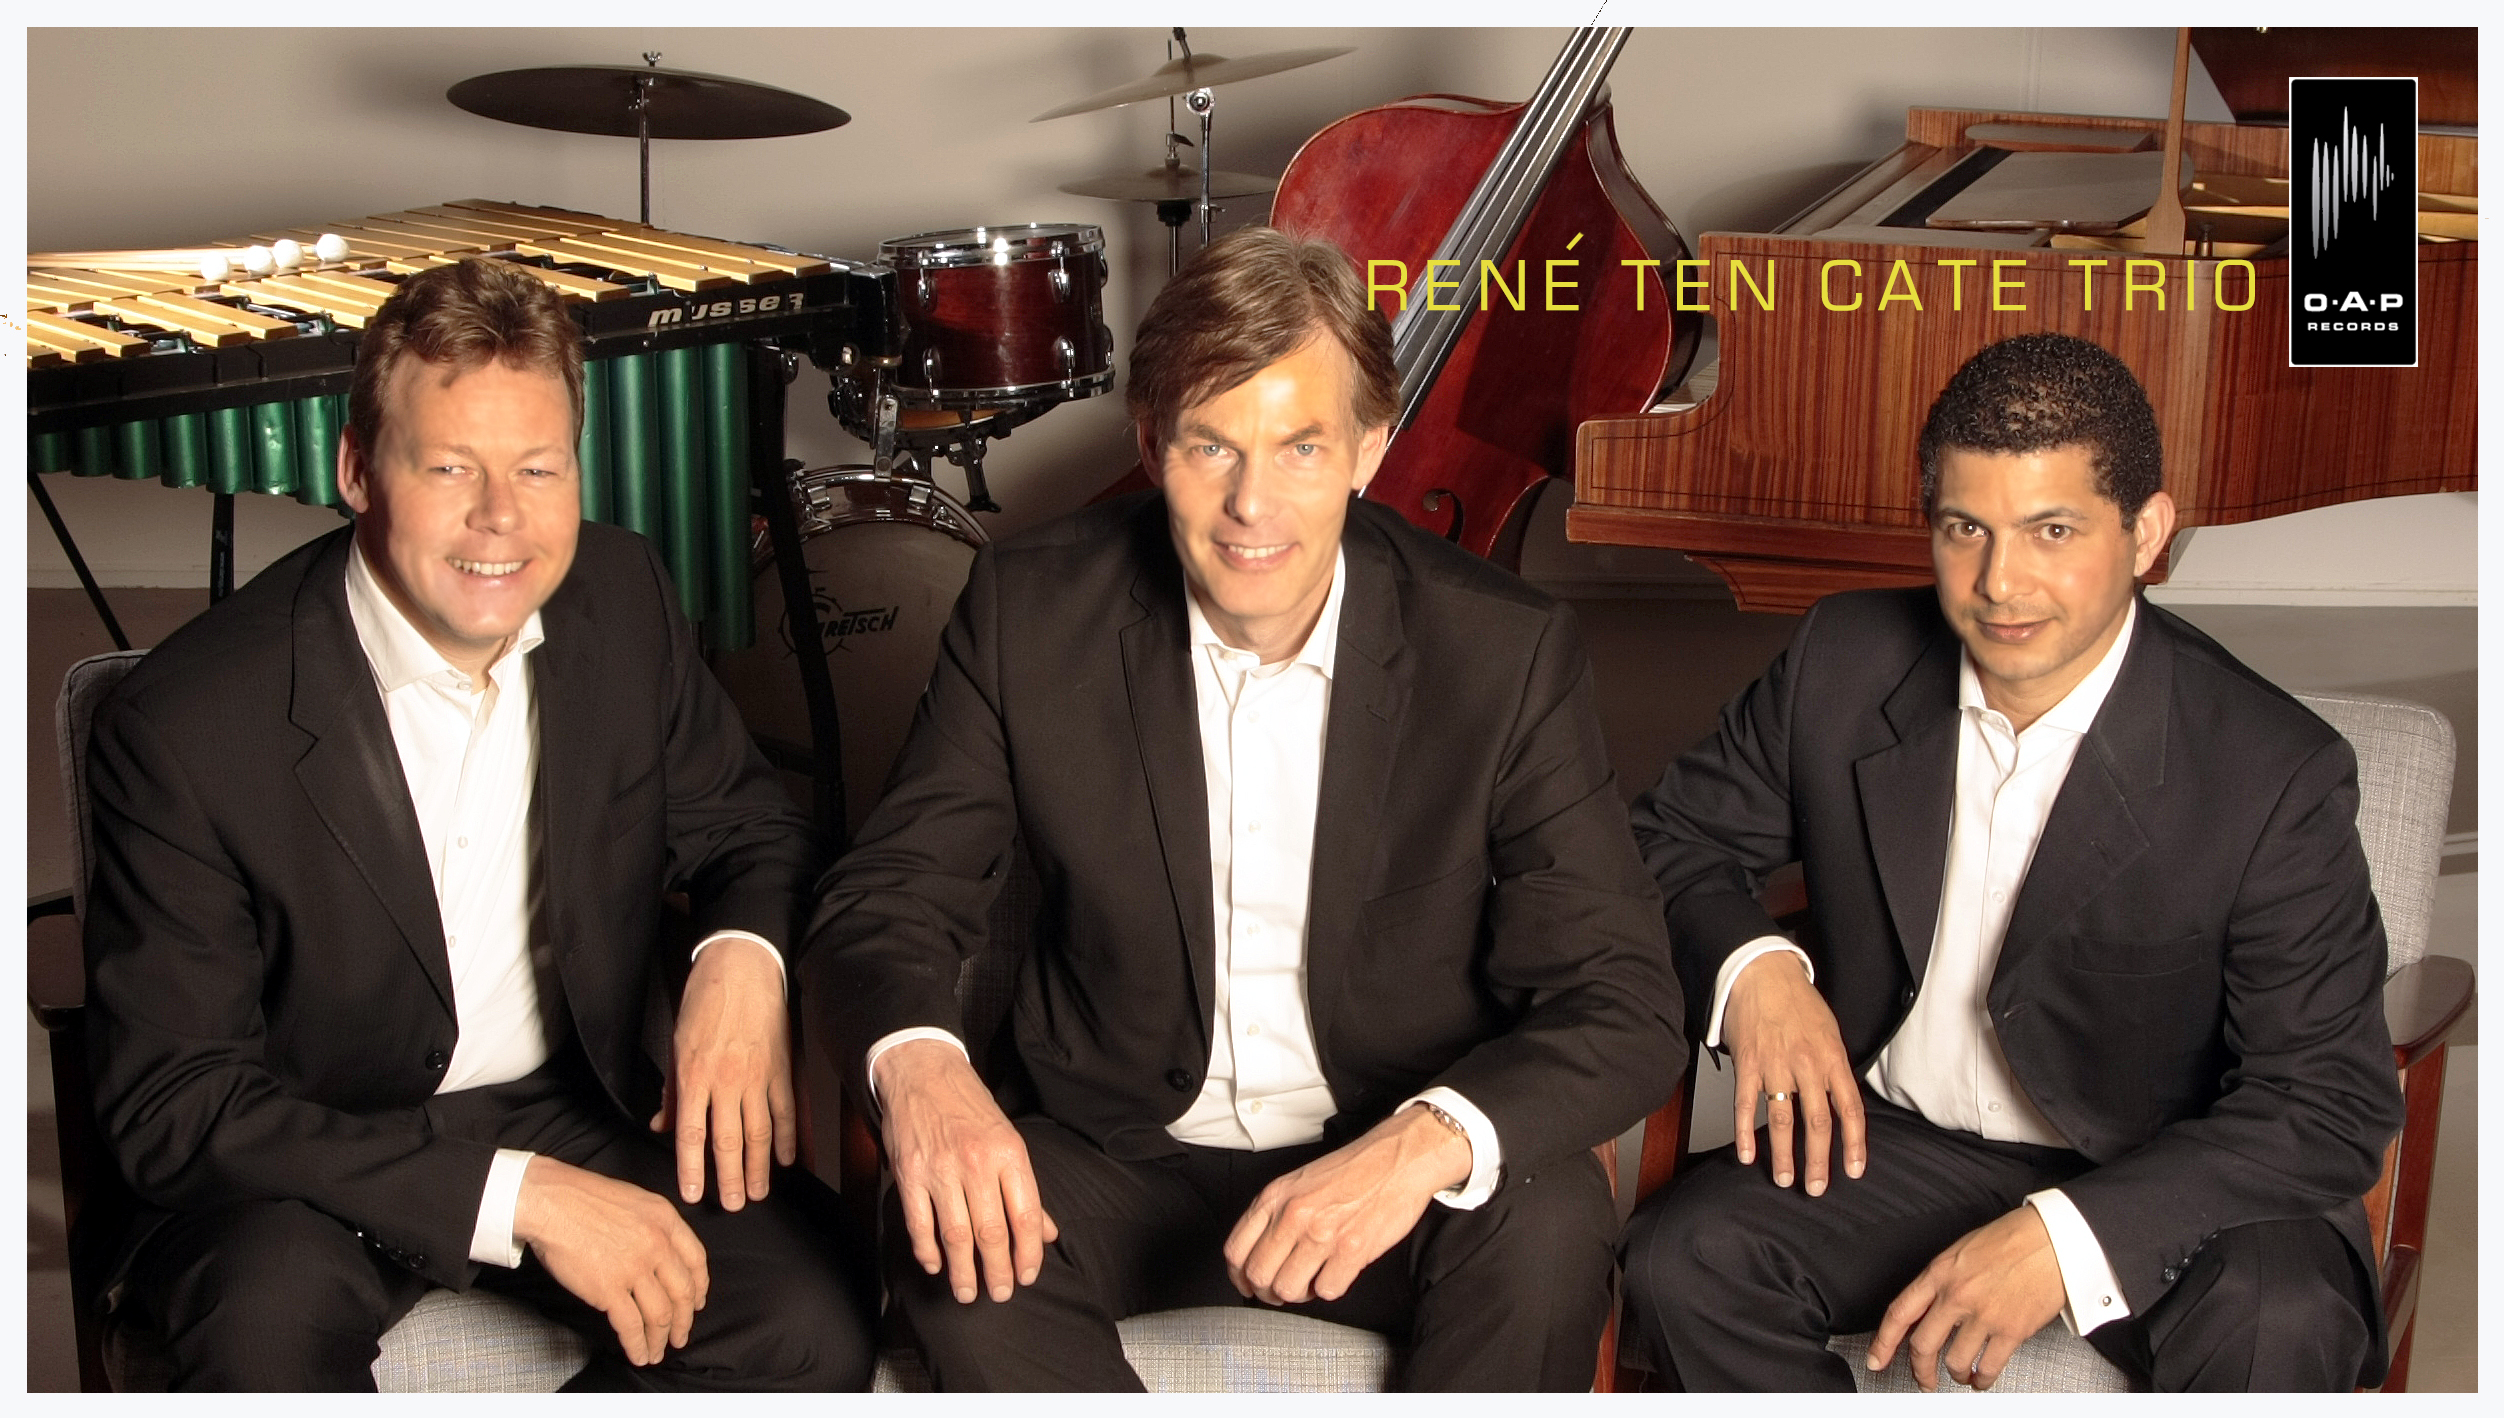 René ten Cate Trio - Solar (CD album)